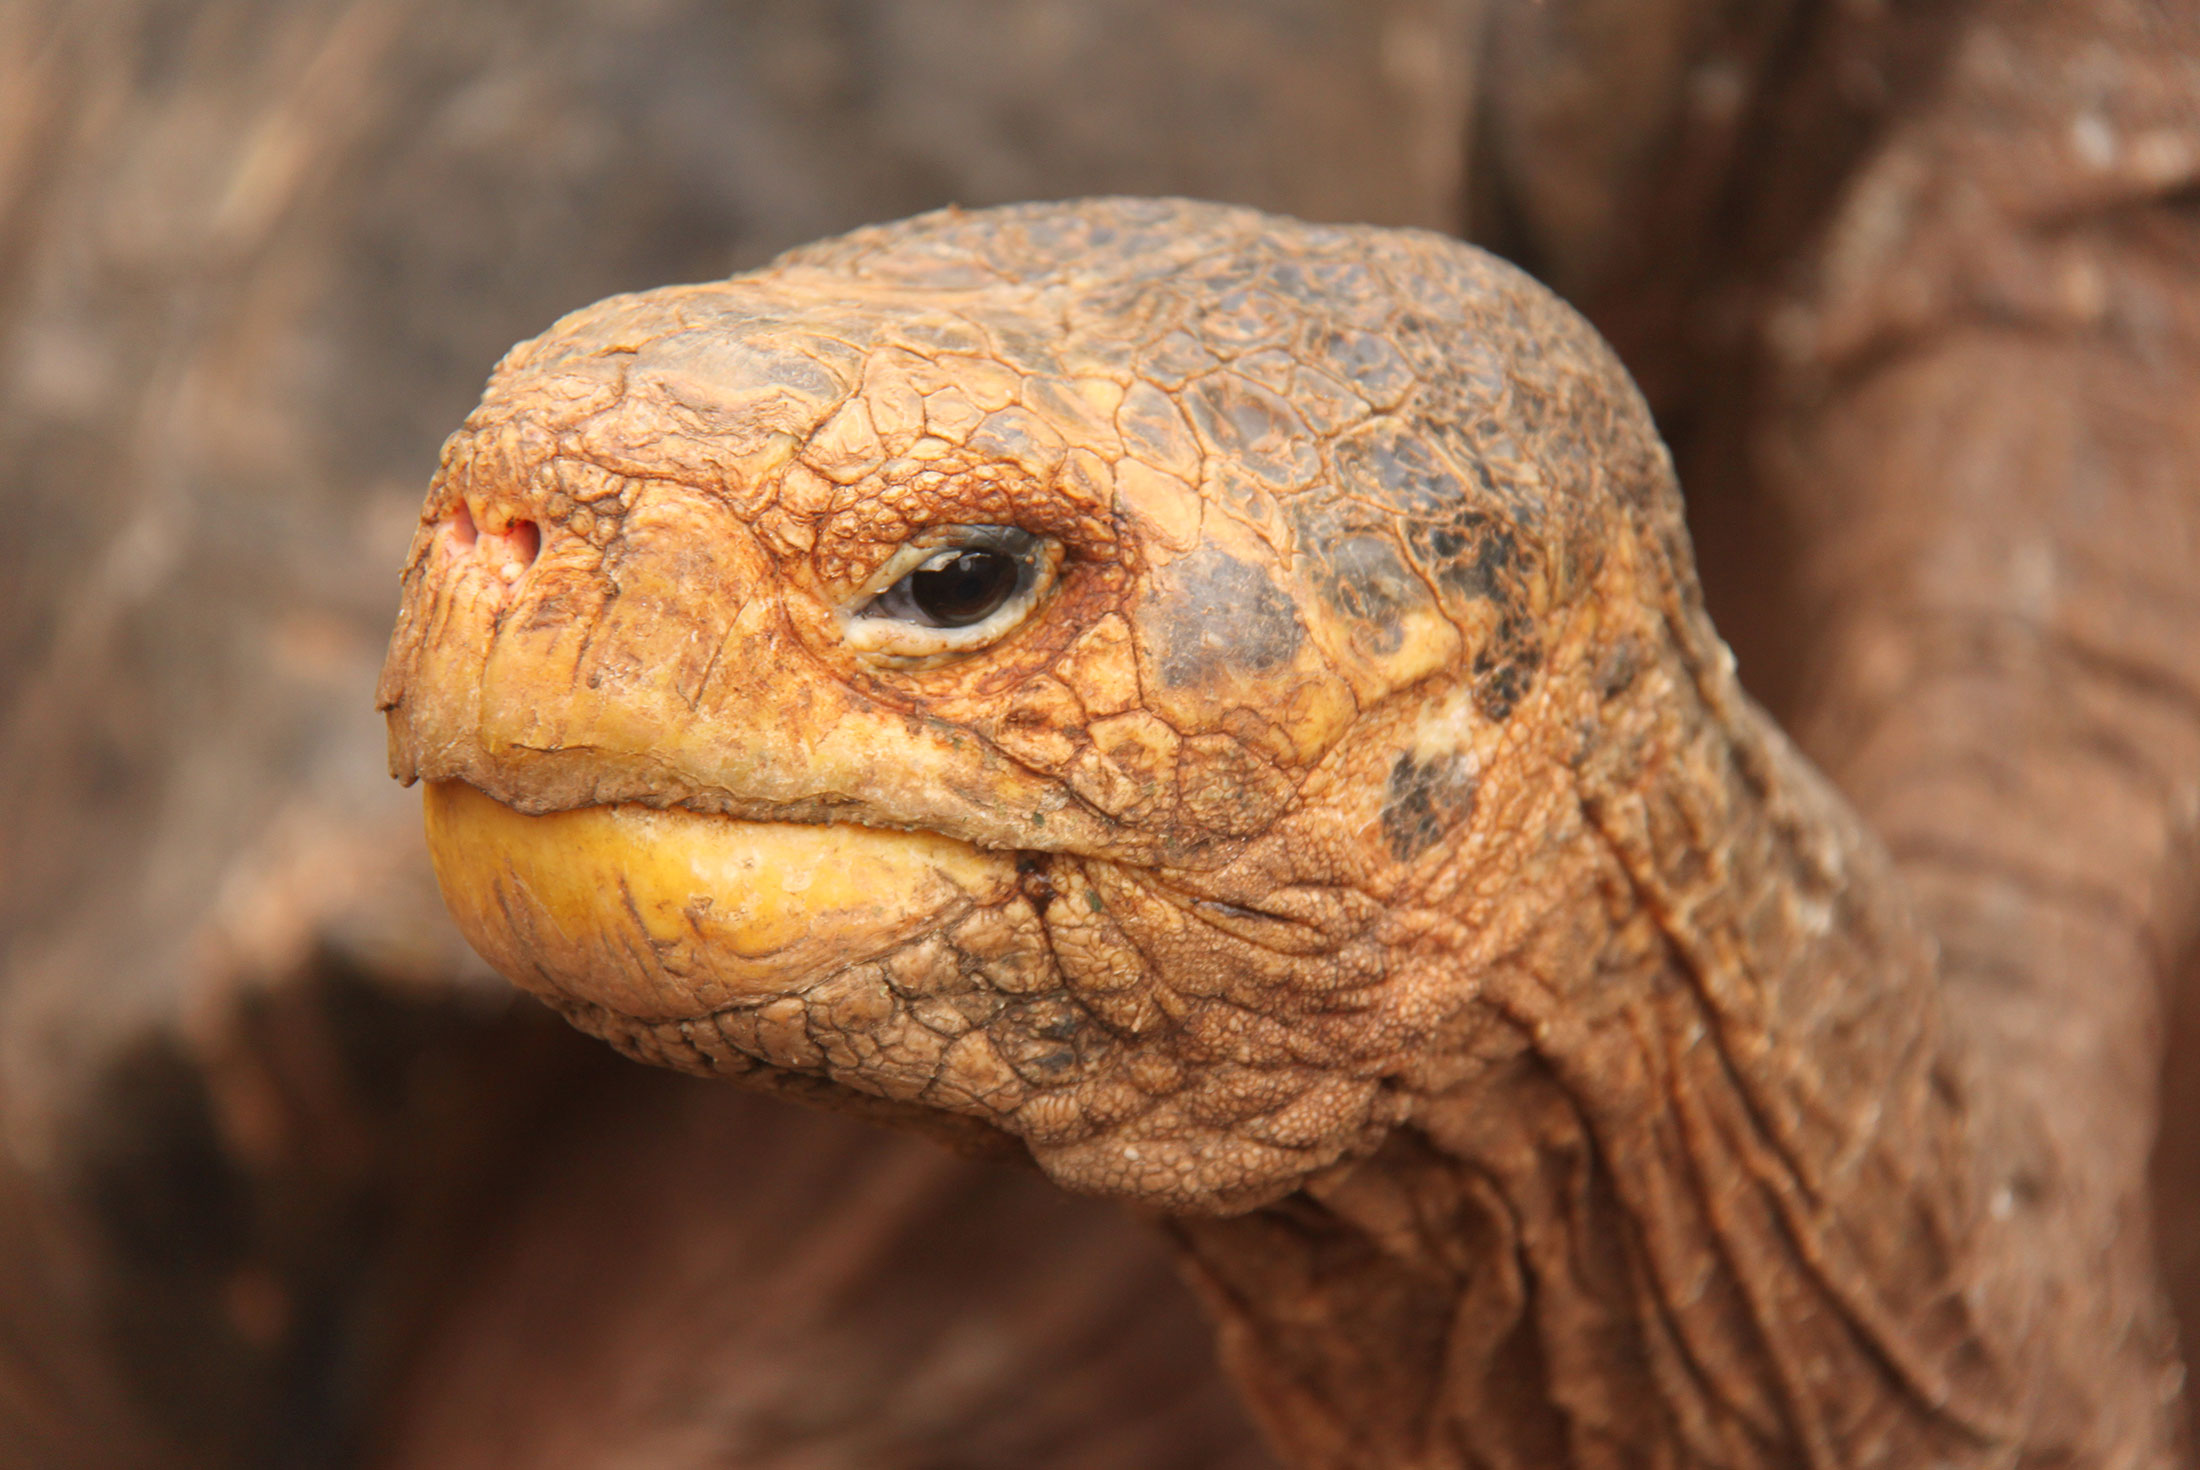 galapagos_giant-tortoise_close-up